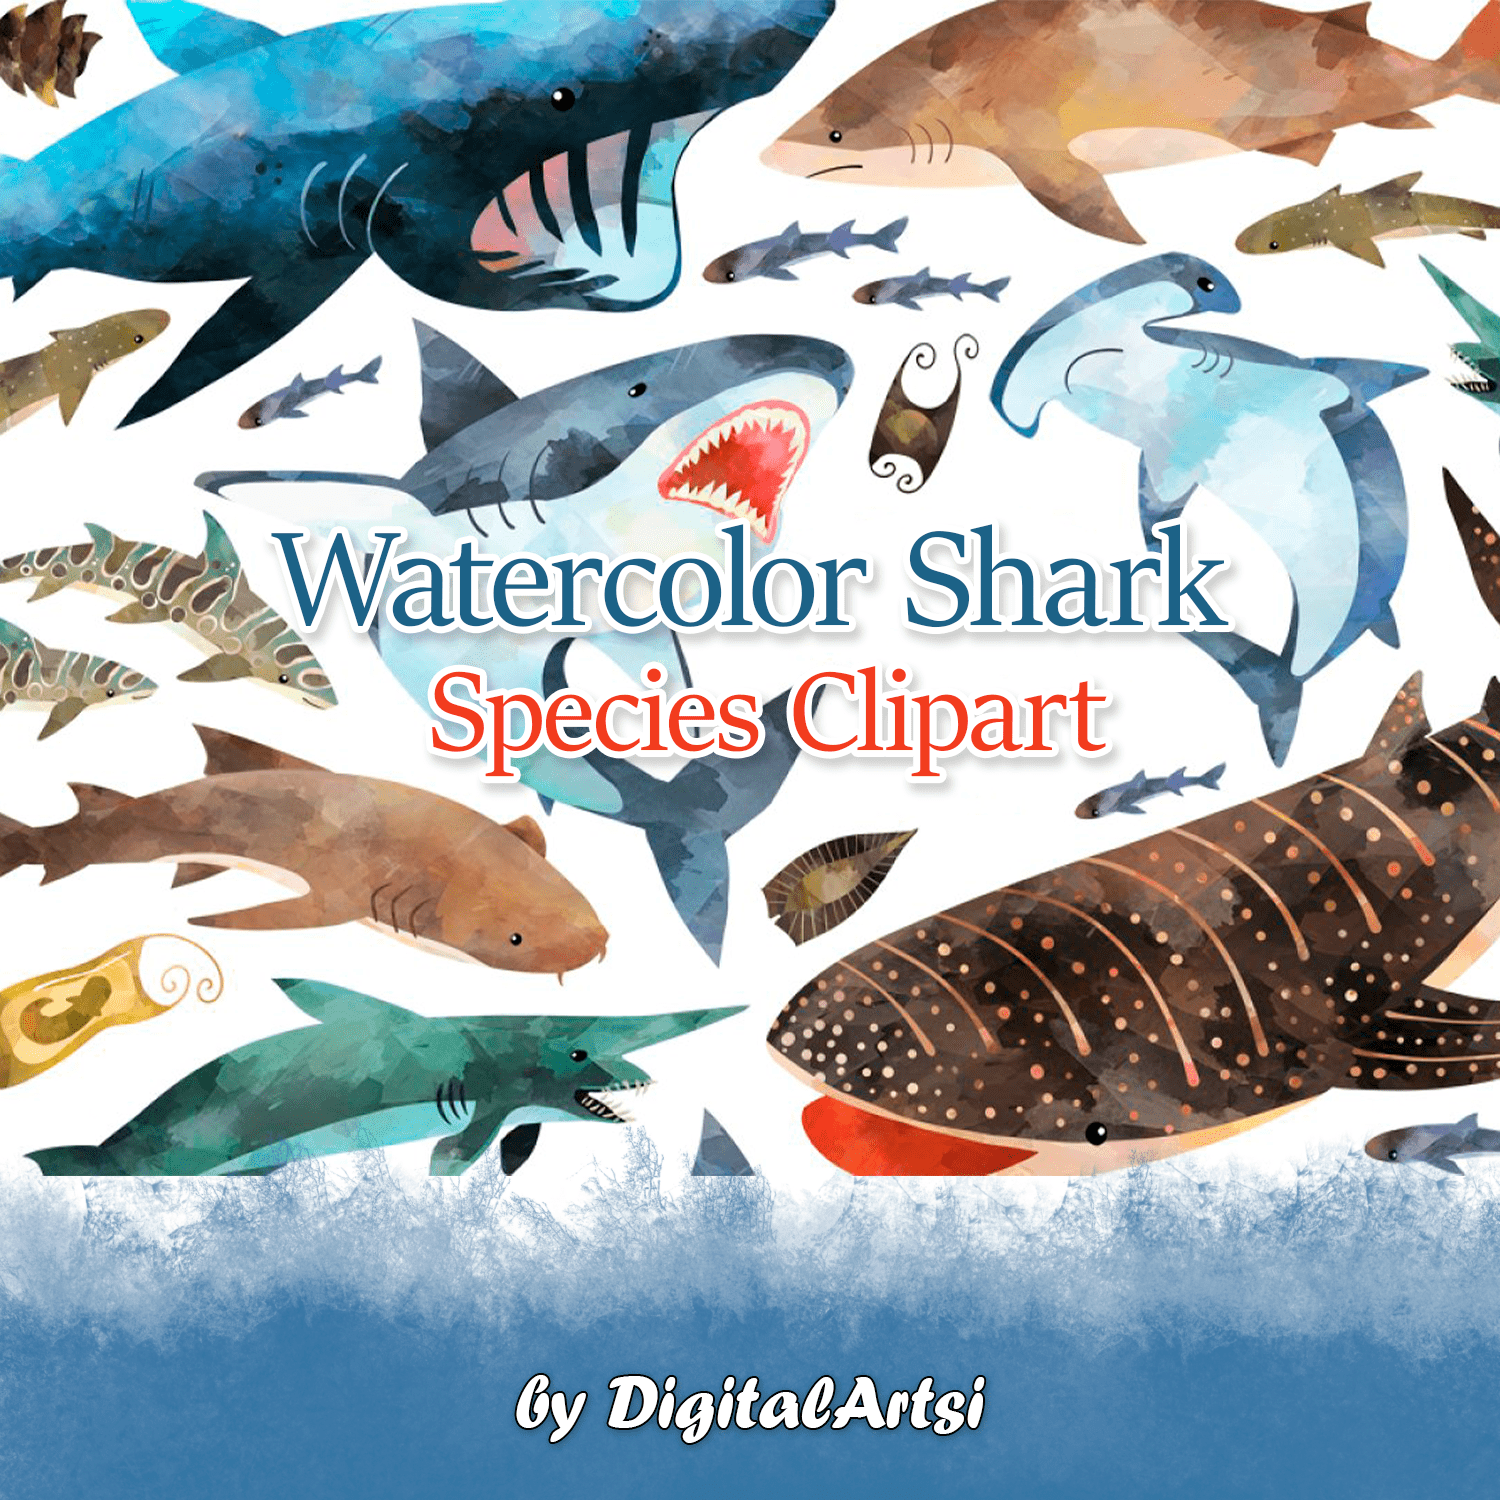 Watercolor Shark Species Clipart cover.